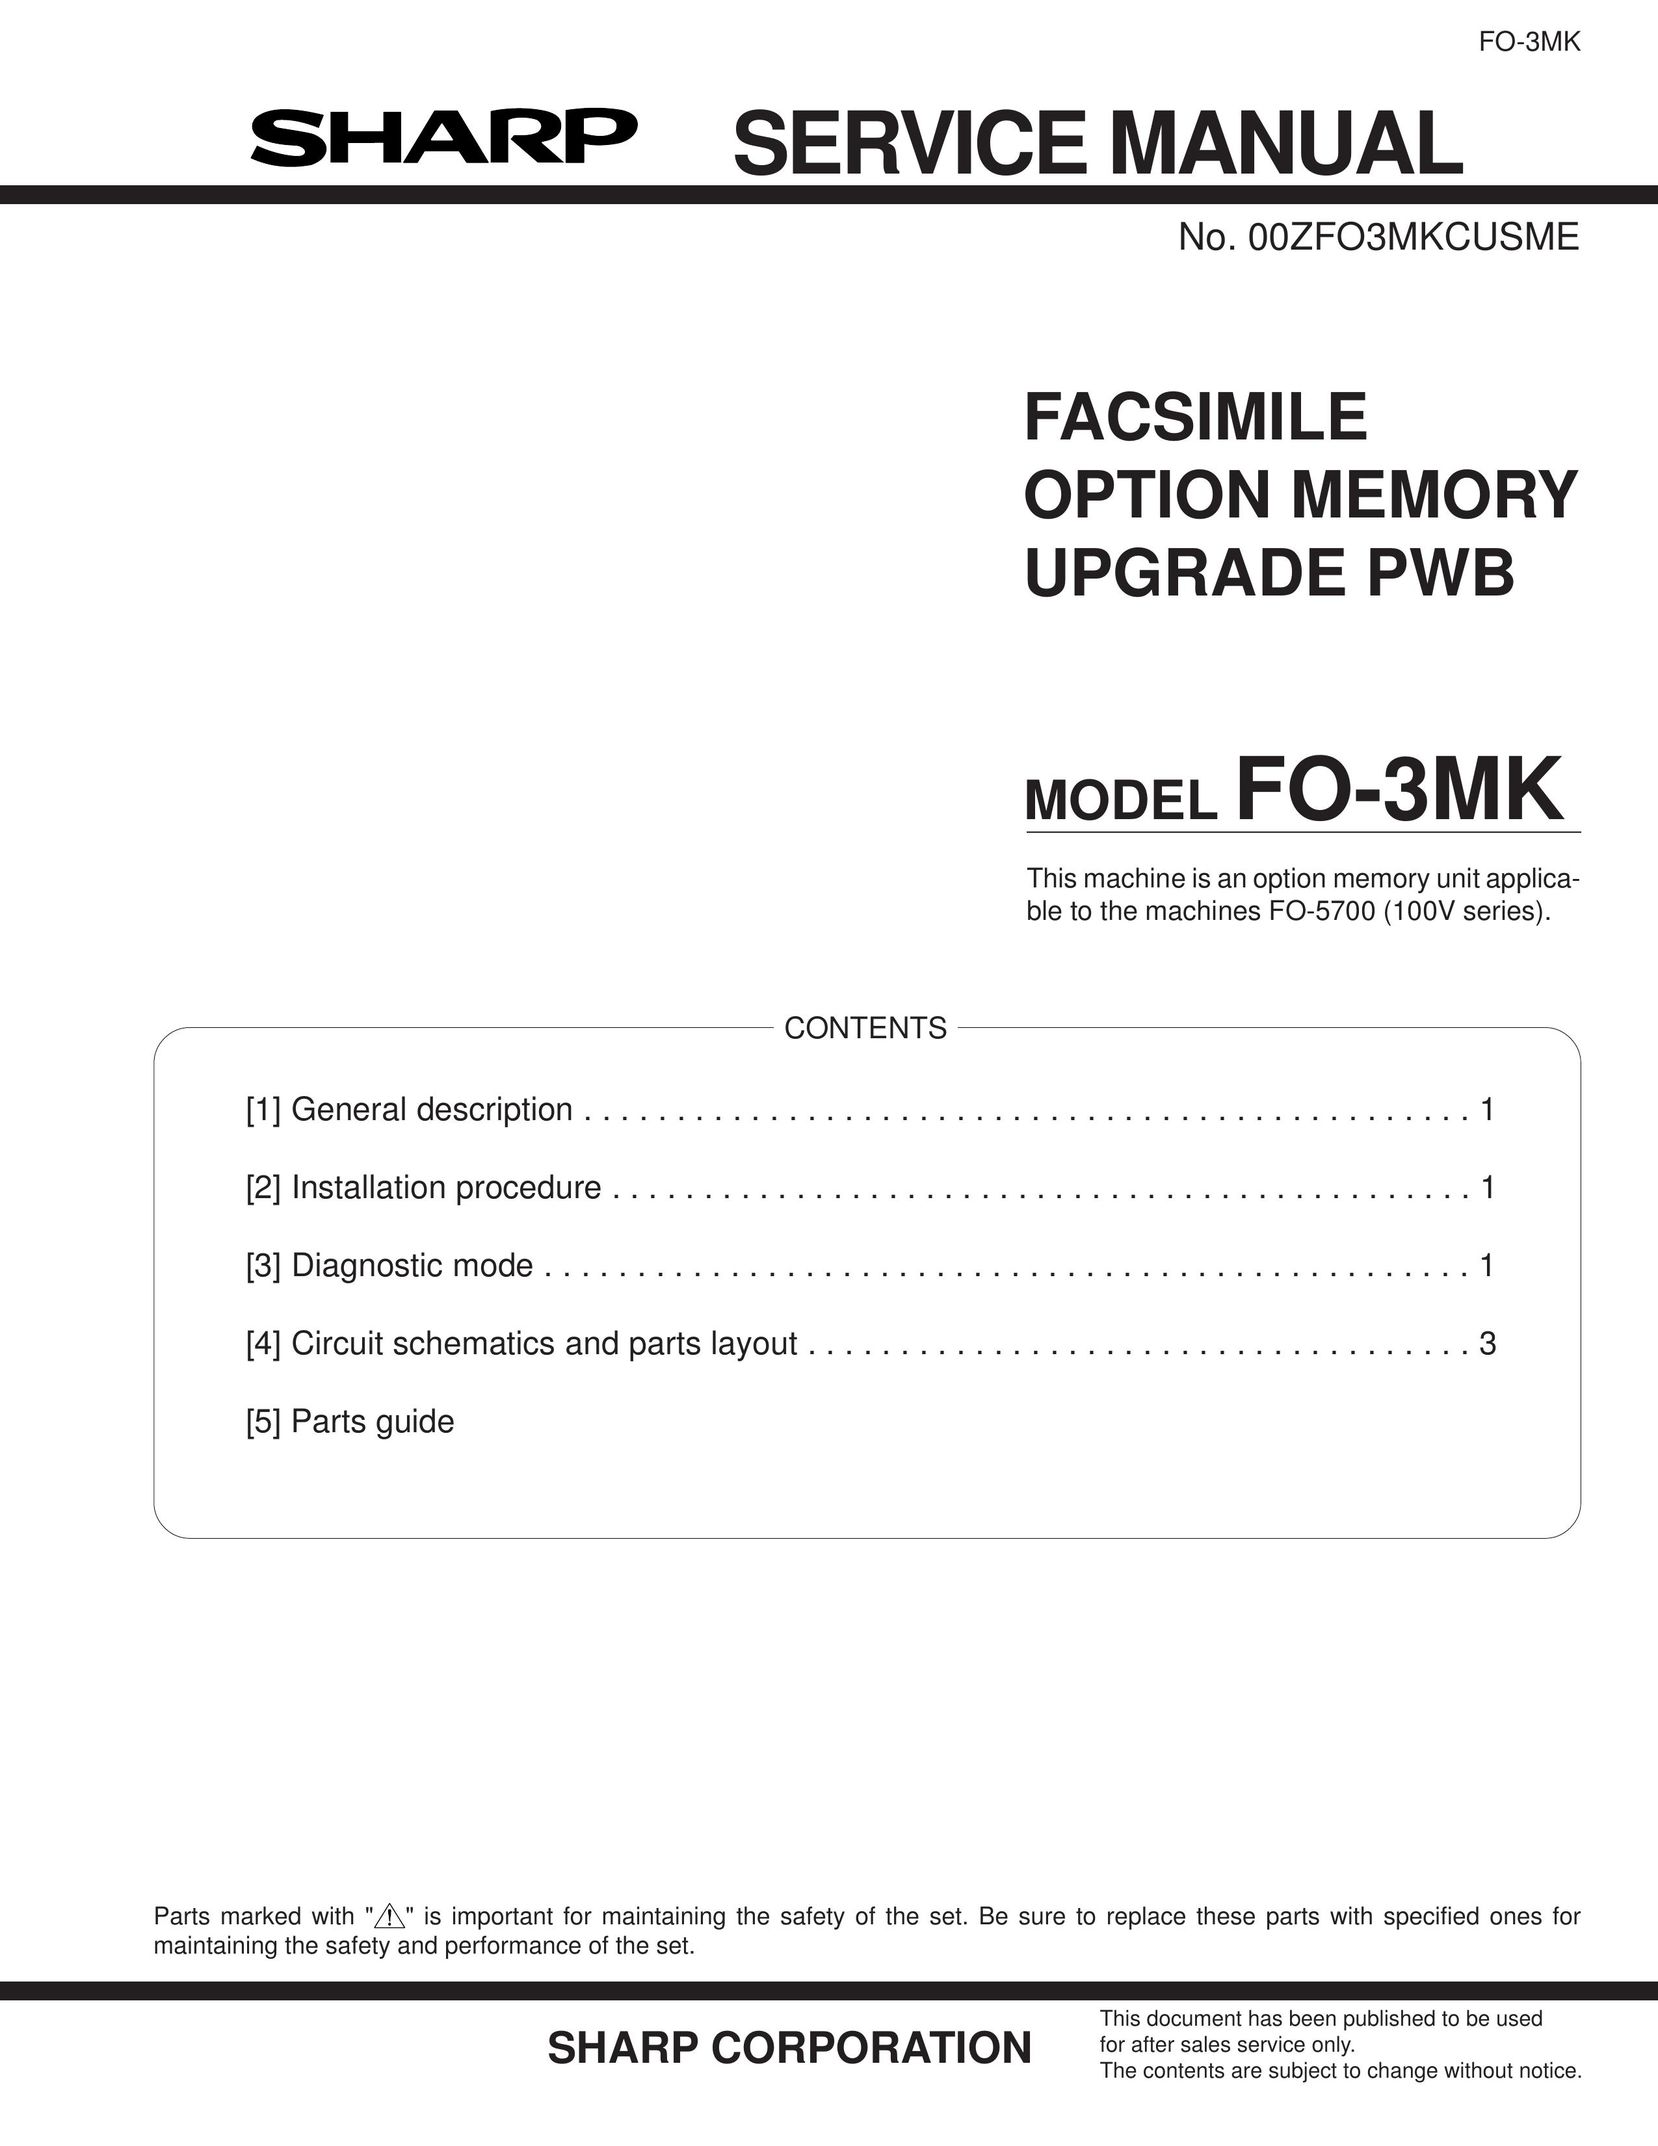 Sharp 00ZFO3MKCUSME Fax Machine User Manual